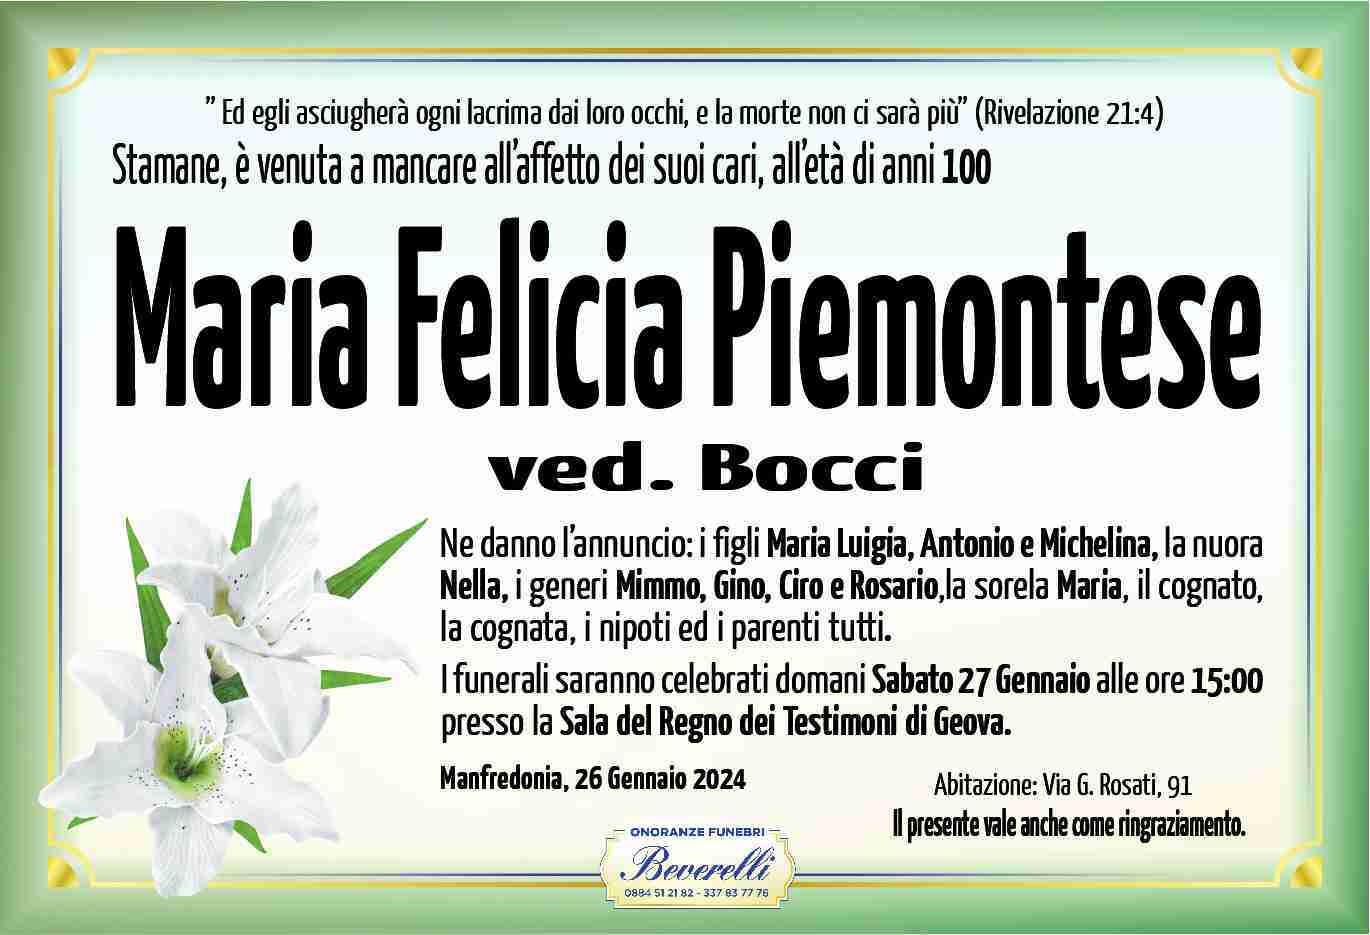 Maria Felicia Piemontese